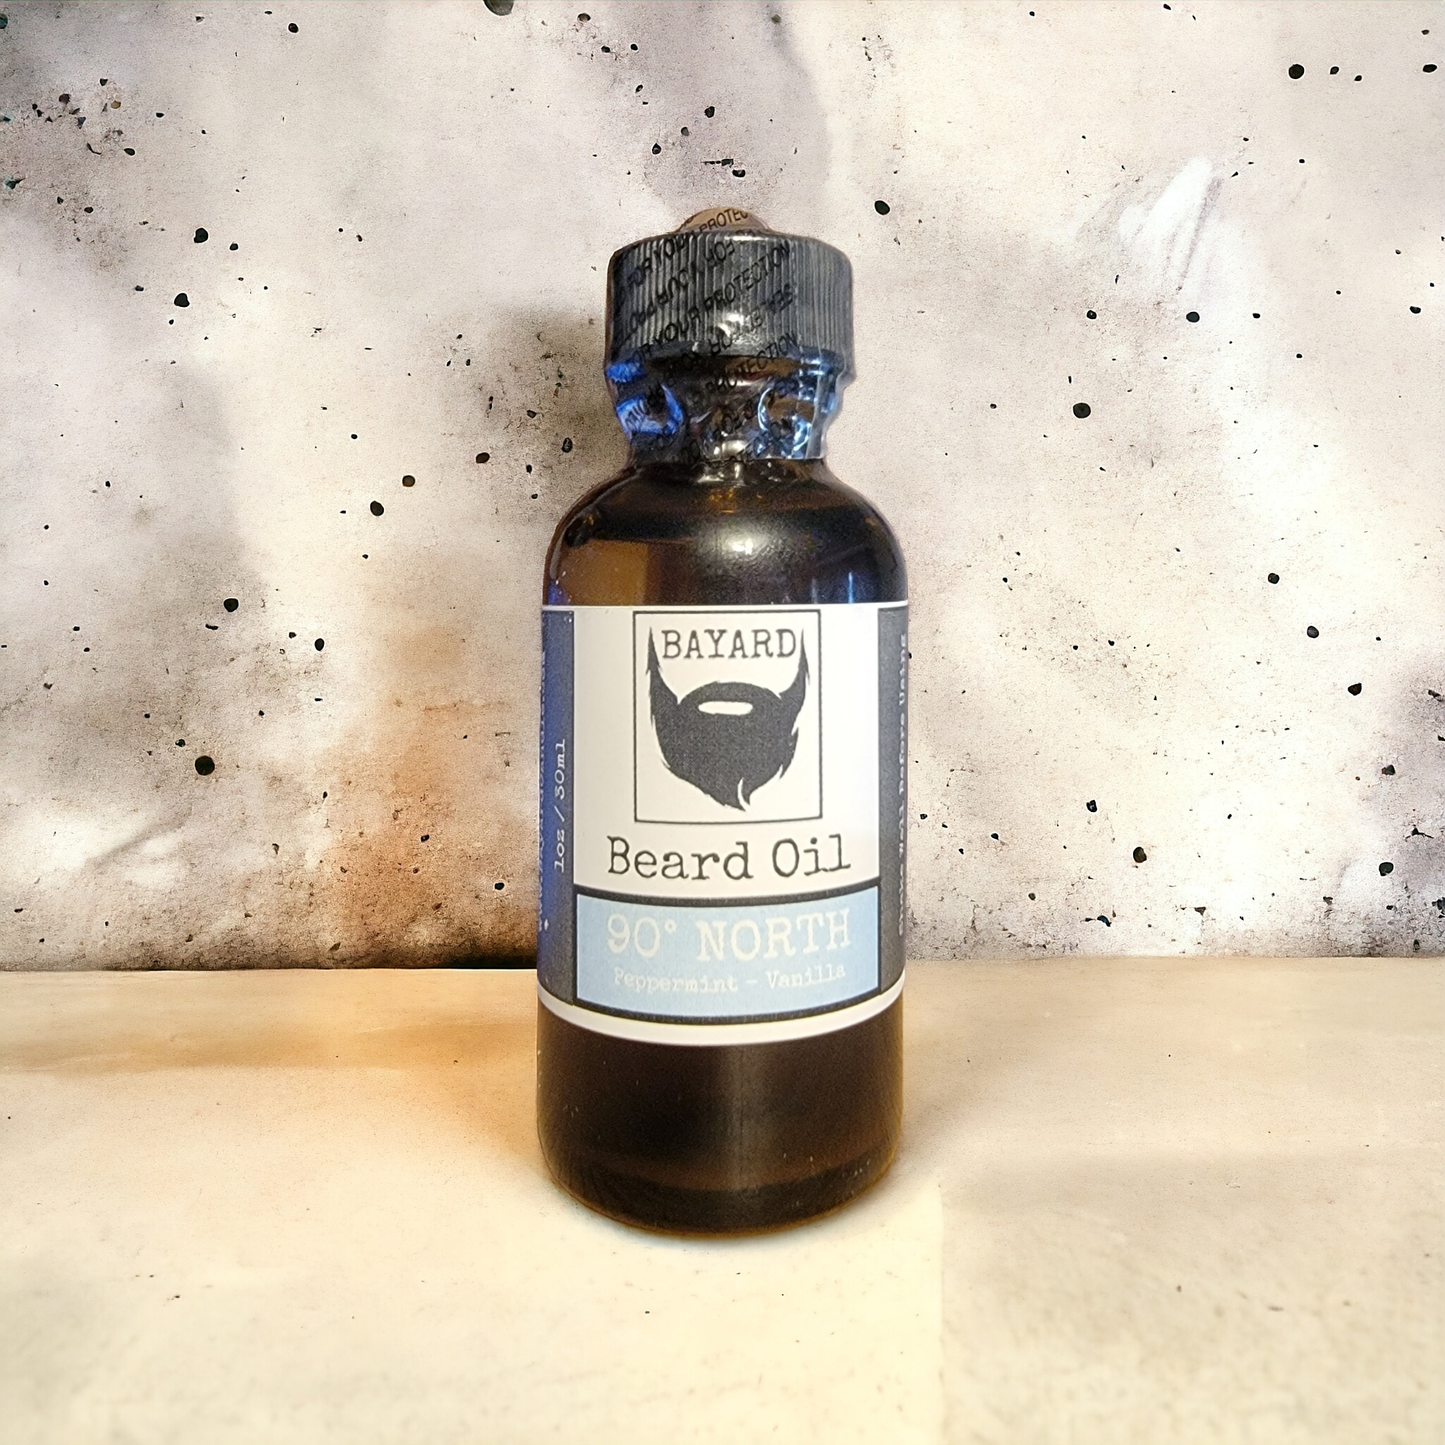 90° North Beard Oil by Bayard Beard and Body - Peppermint and Vanilla